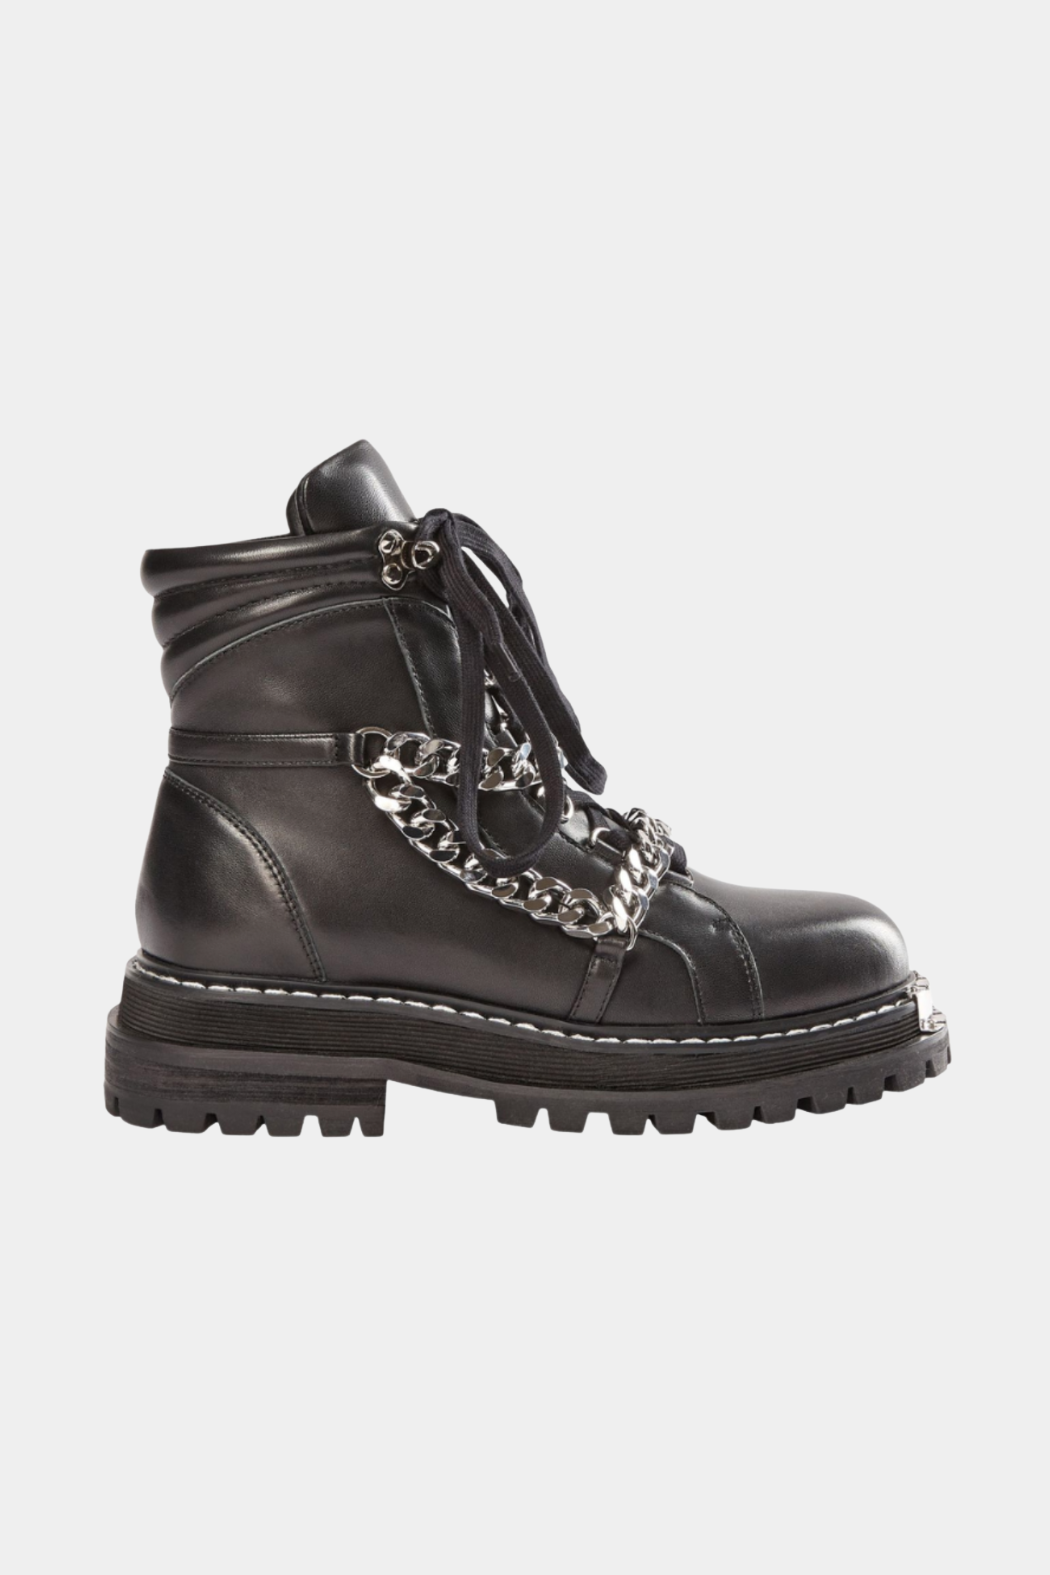 Schnoor - S223704 boot, black – Butik Visholm